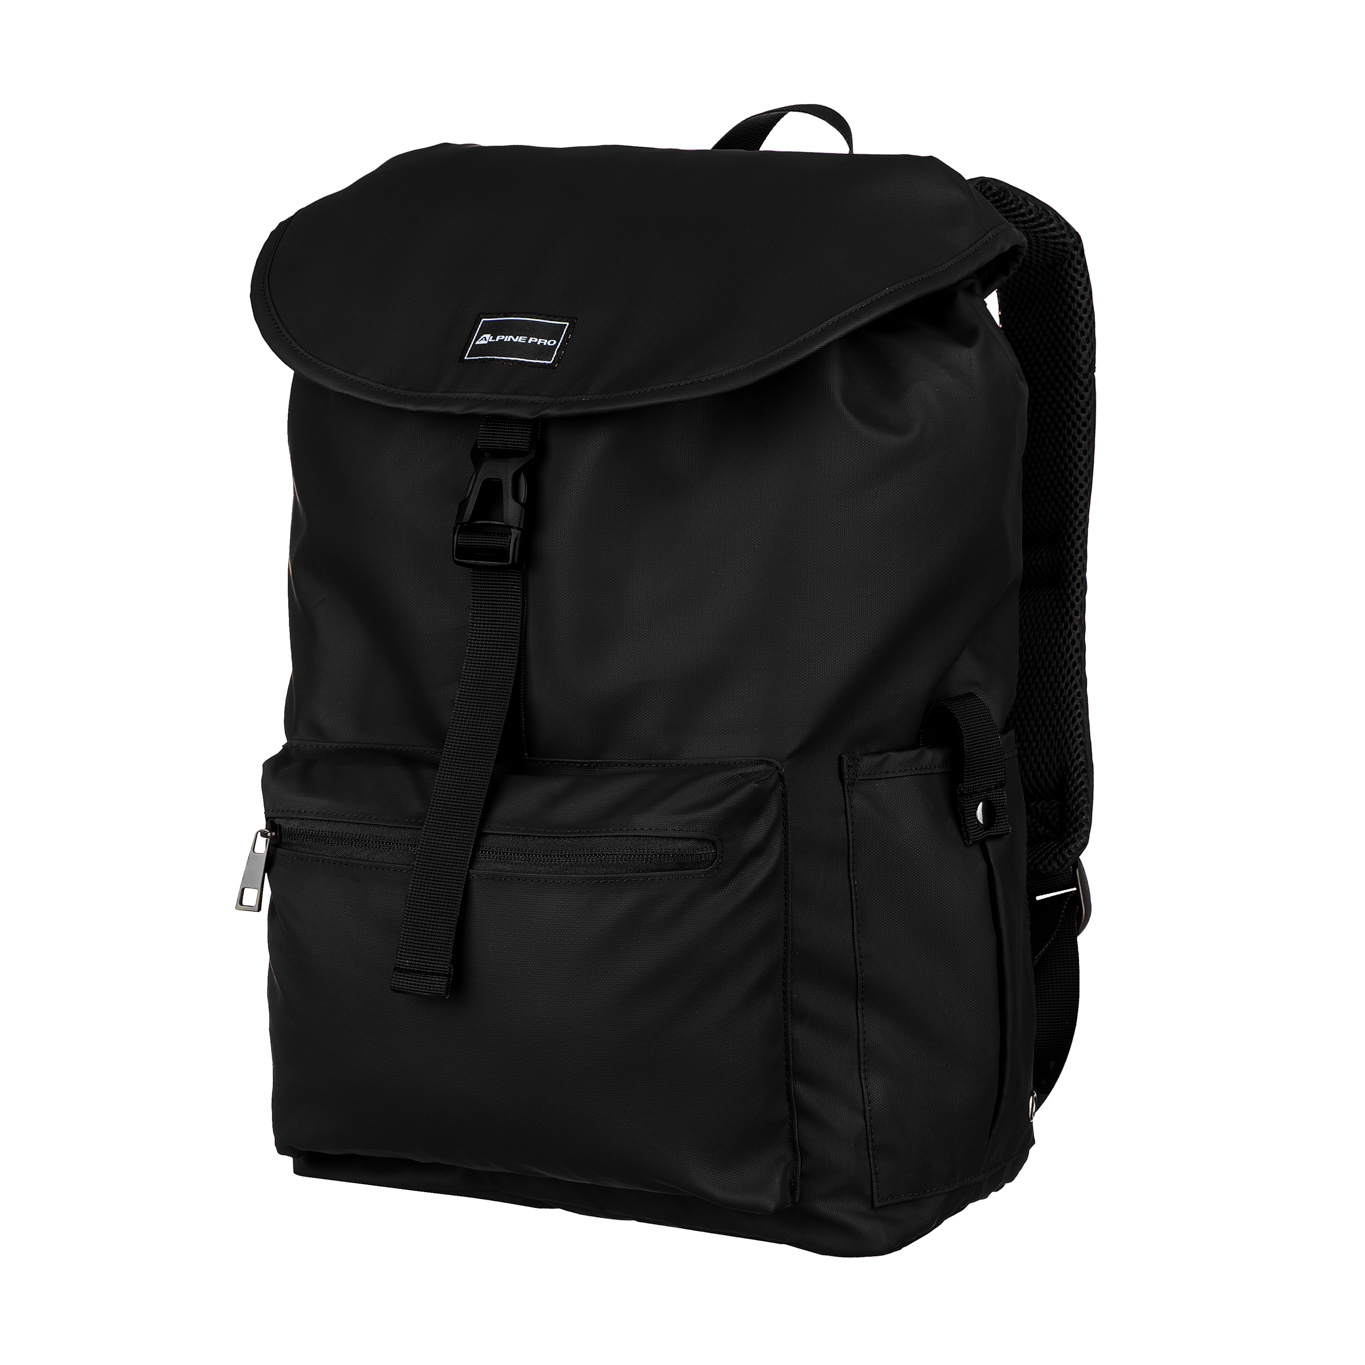 City backpack ALPINE PRO XEHE black